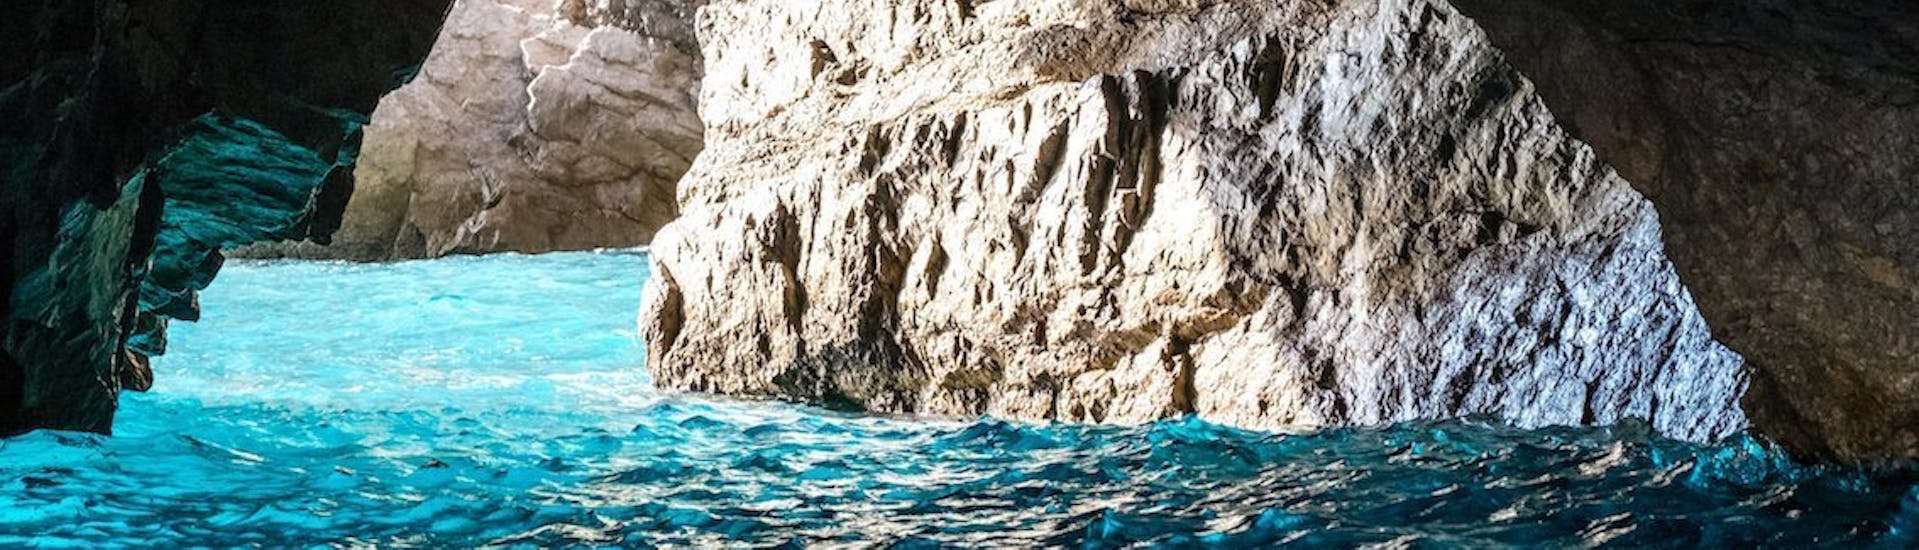 Gita in barca alle isole de Li Galli e Capri da Amalfi.